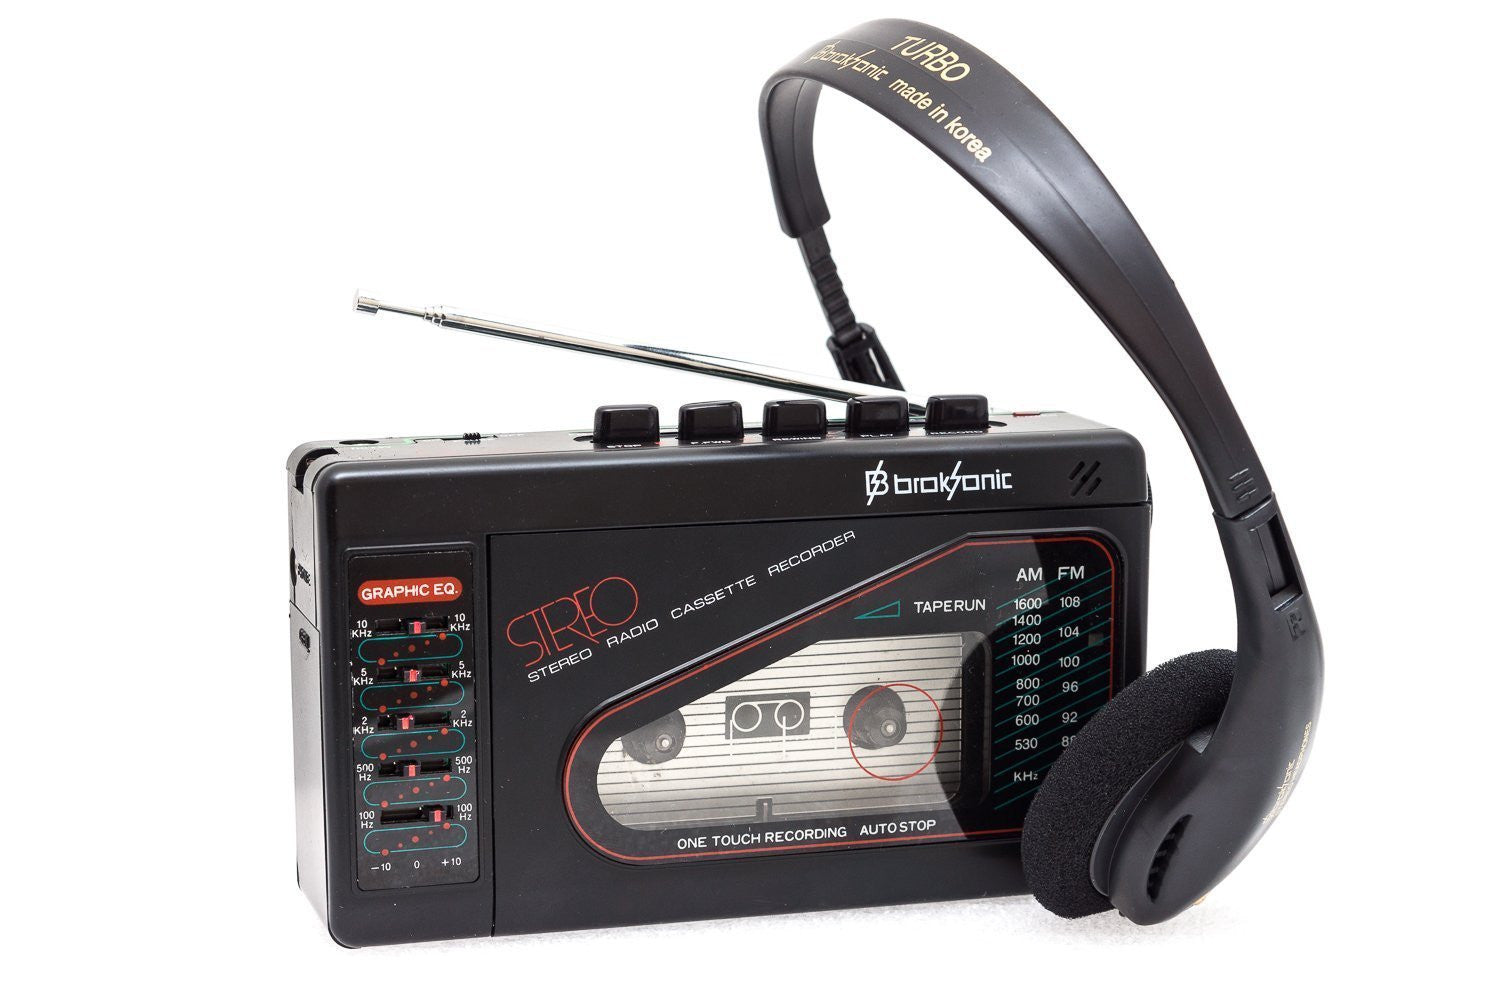 NEW - Broksonic TSG-45 Walkman AM/FM Stereo Cassette Tape Deck & Recorder with Dynamic Stereo Headphones